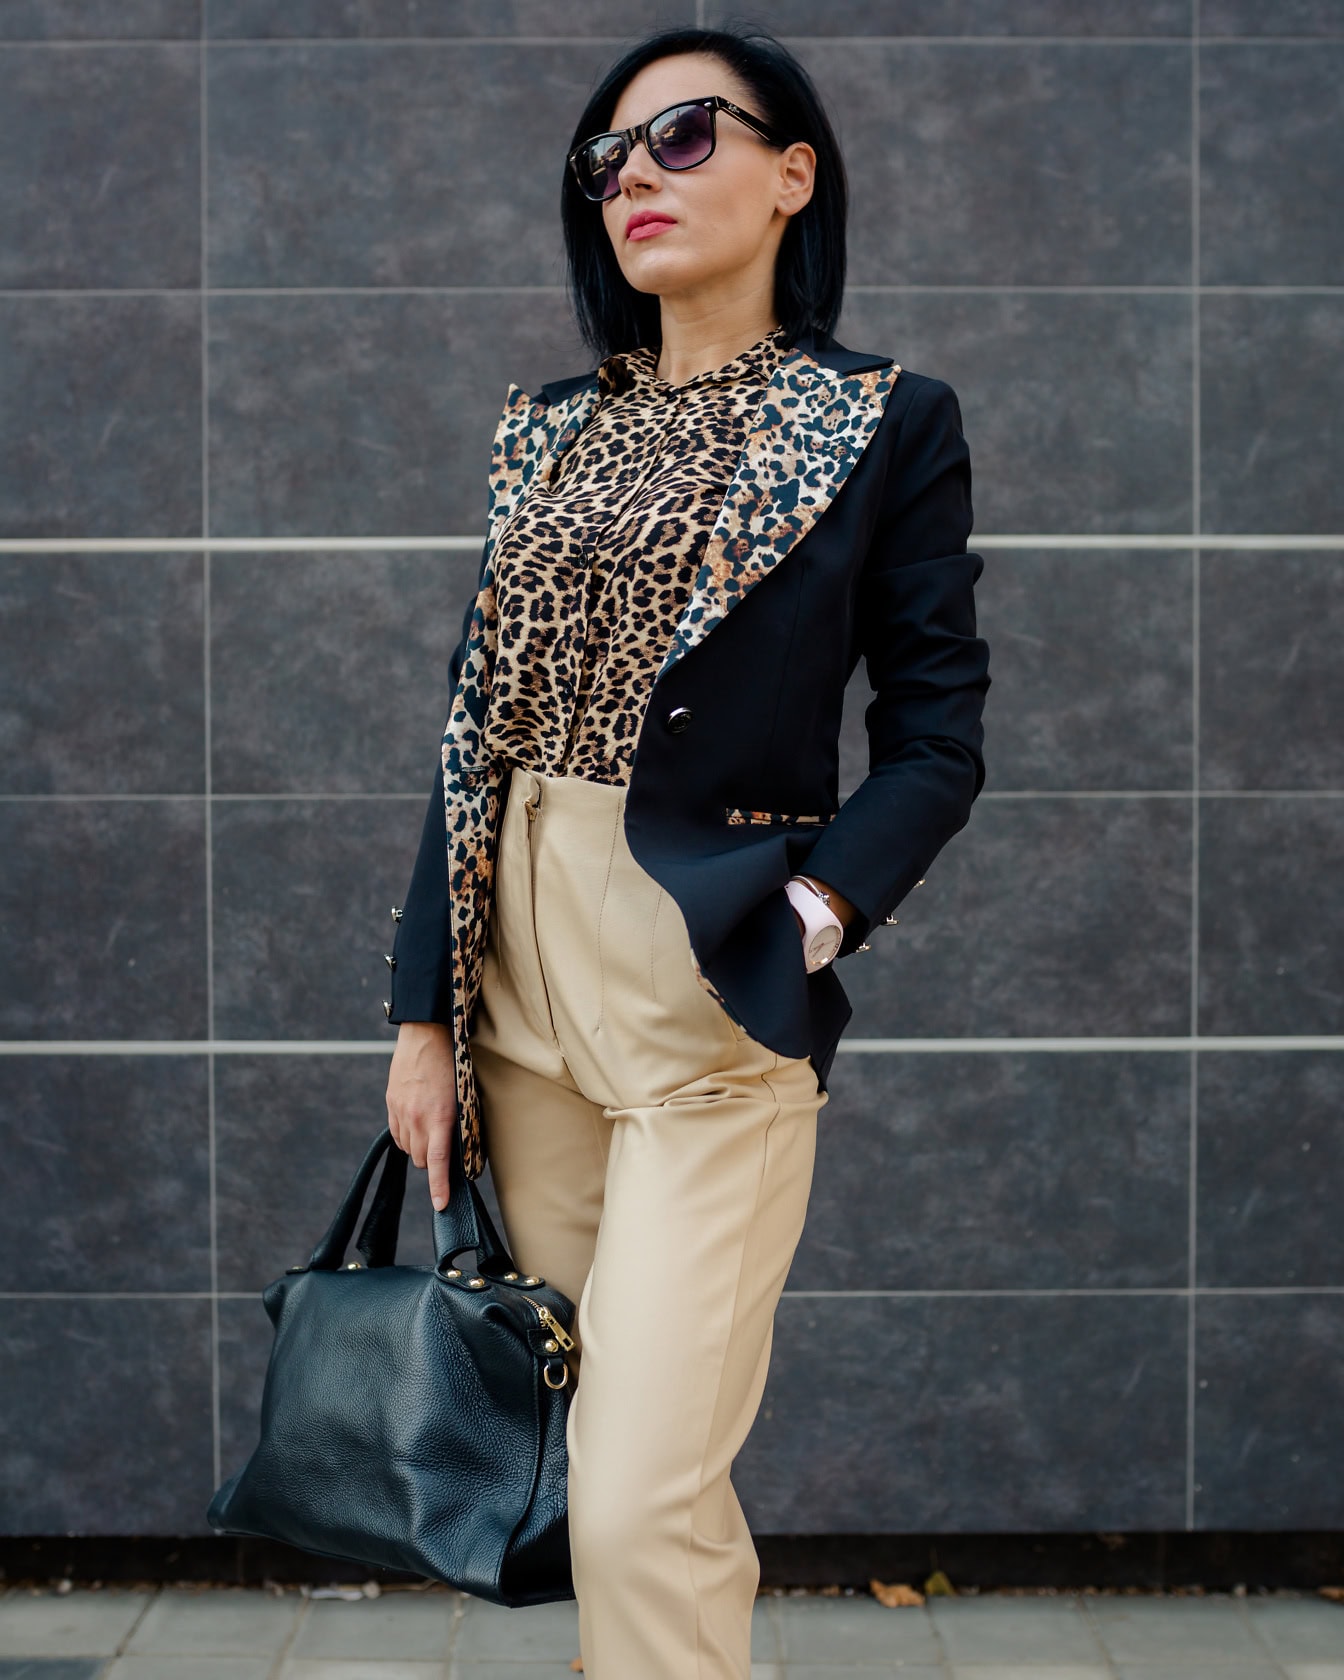 Pengusaha wanita berpose dalam kemeja motif macan tutul dan celana cokelat dengan tas kulit hitam